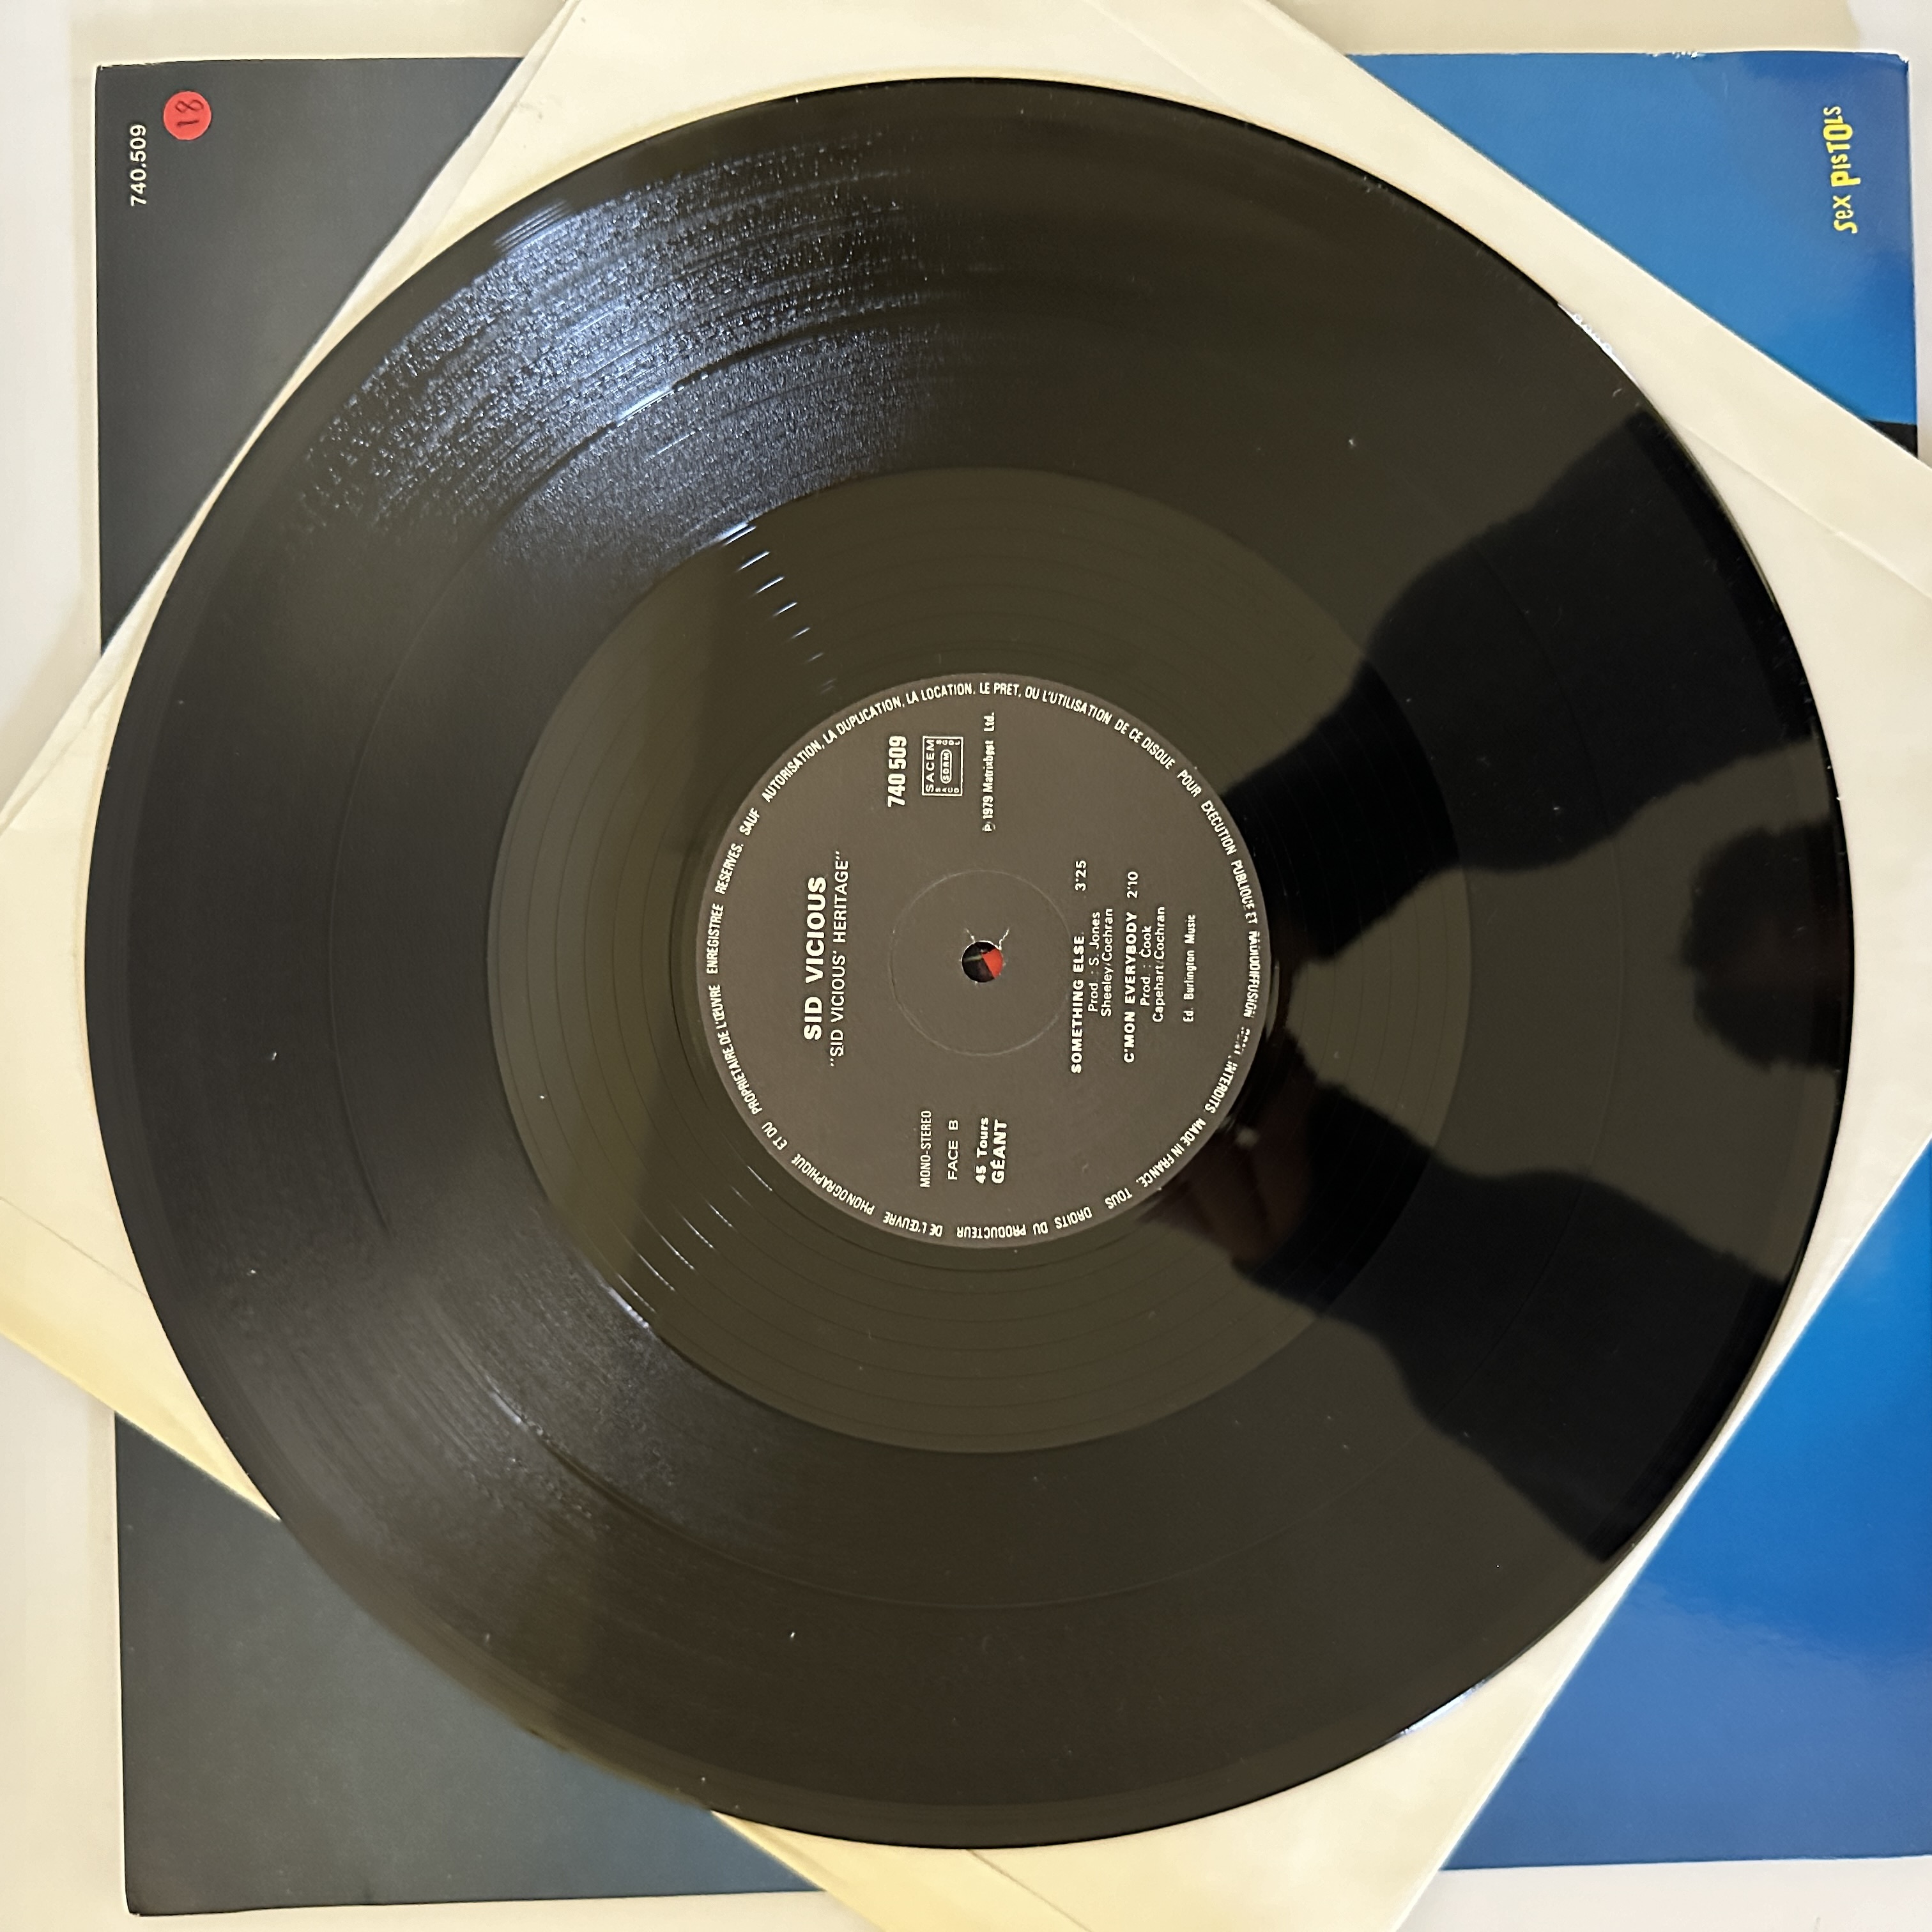 Sid Vicious - C'mon Everybody vinyl LP - Image 8 of 8